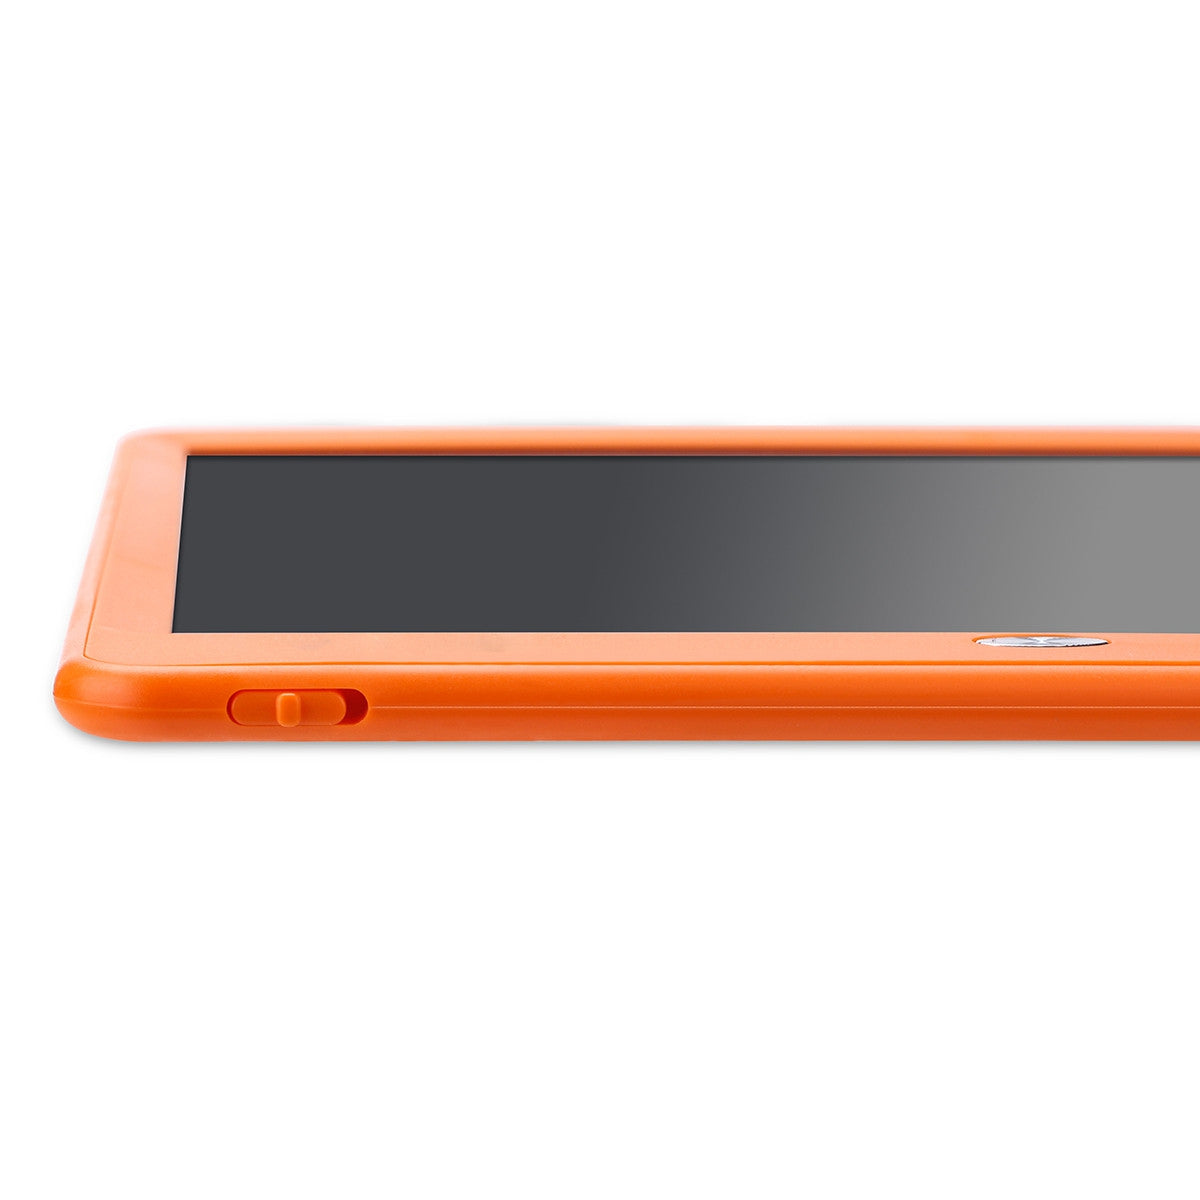 Ainol A1001 10 Inch Electronic Writing Board with LCD Screen----Orange